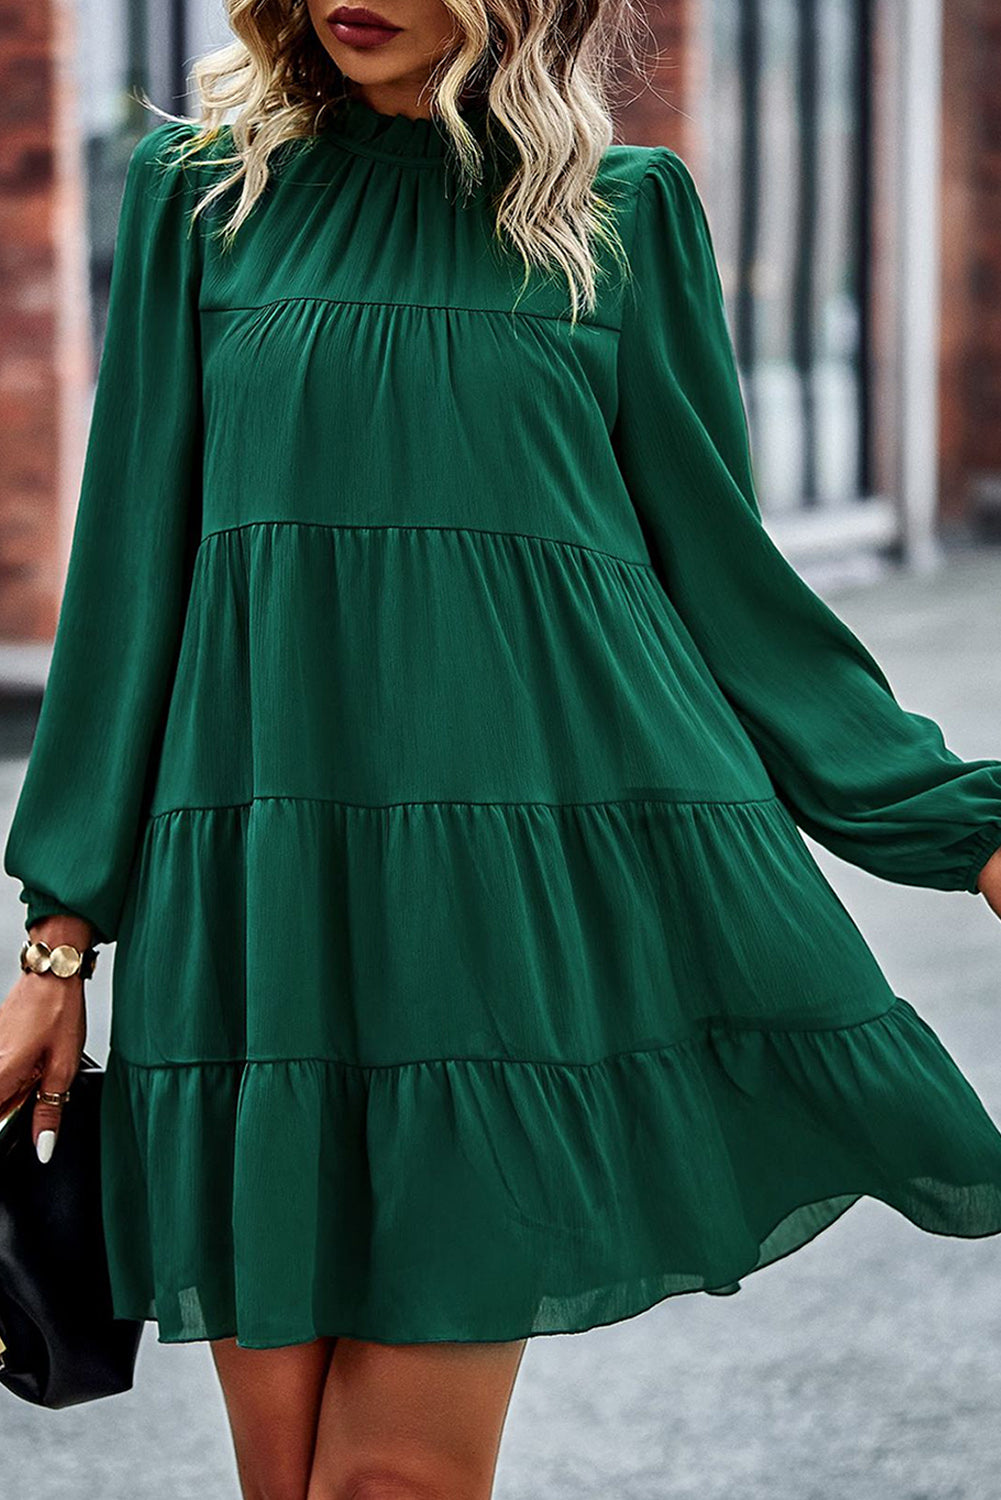 Green Mock Neck Solid Color Pleated Mini Dress - Babbazon Short Dresses